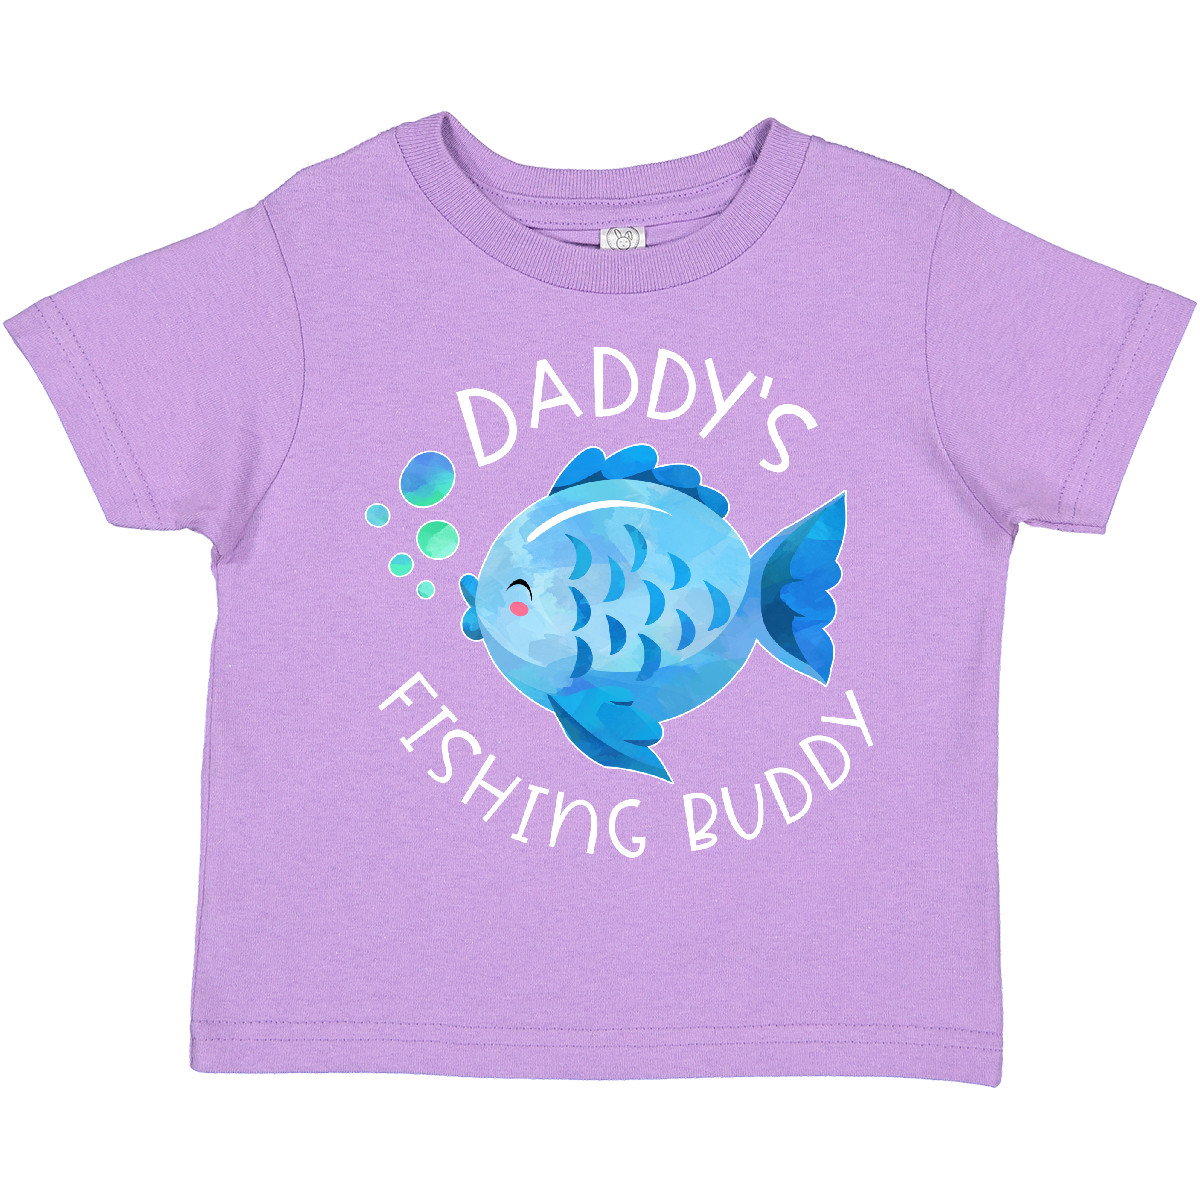 Inktastic Fishing Boy or Dad Boys Long Sleeve Toddler T-Shirt